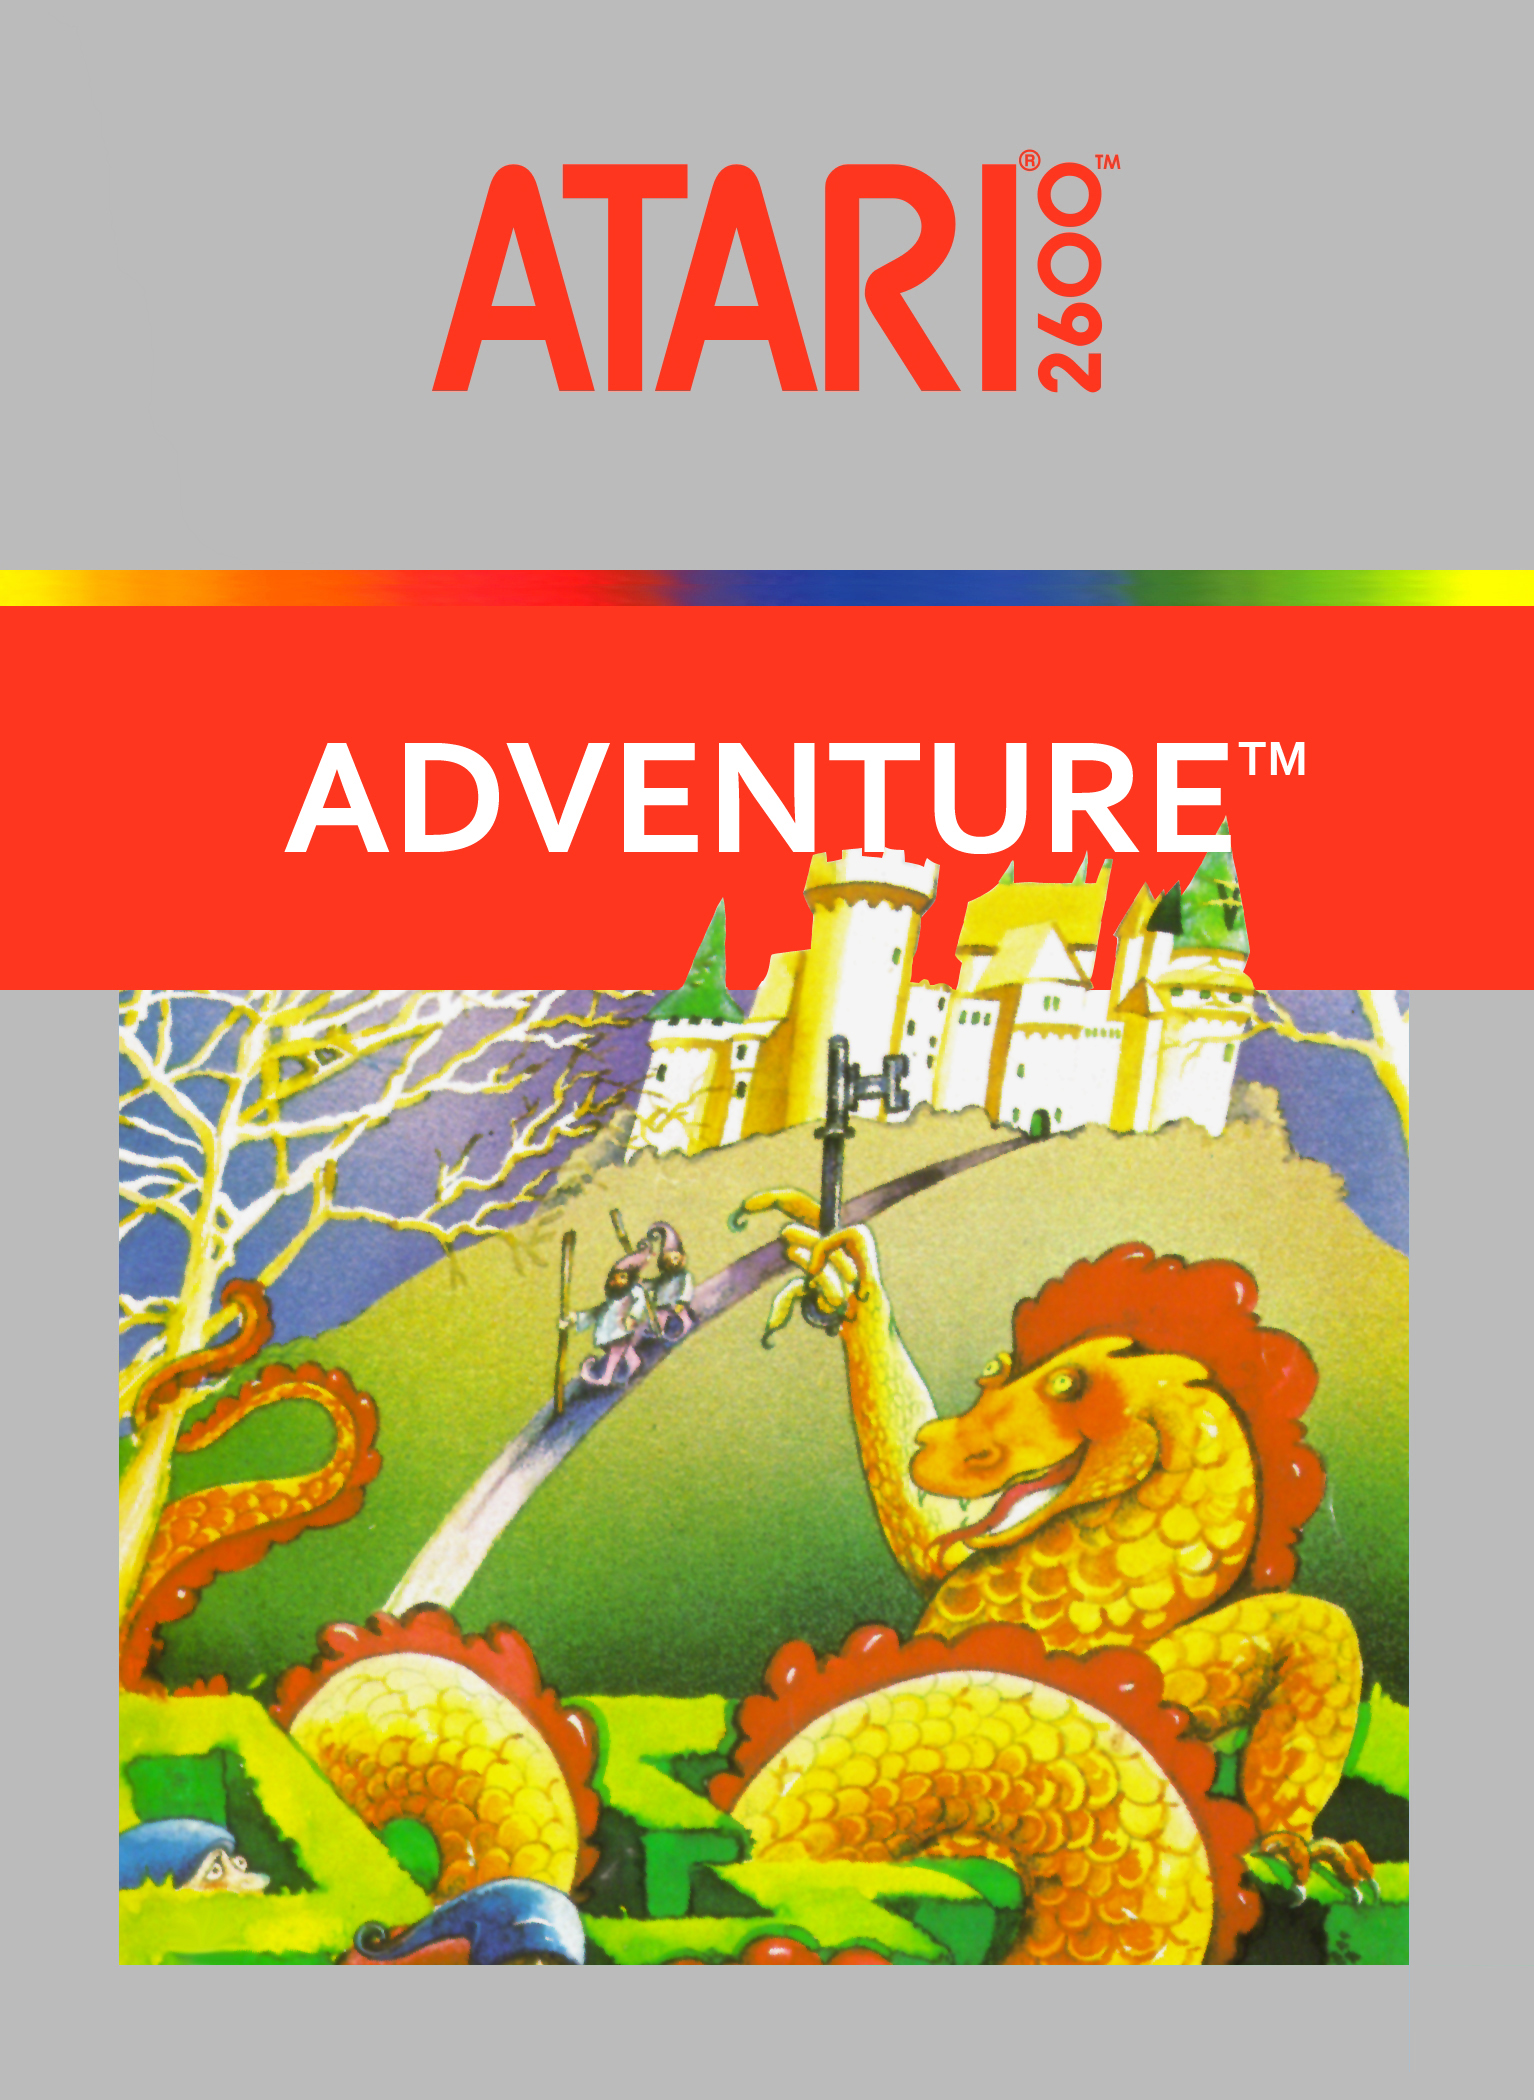 Adventure cover.jpg